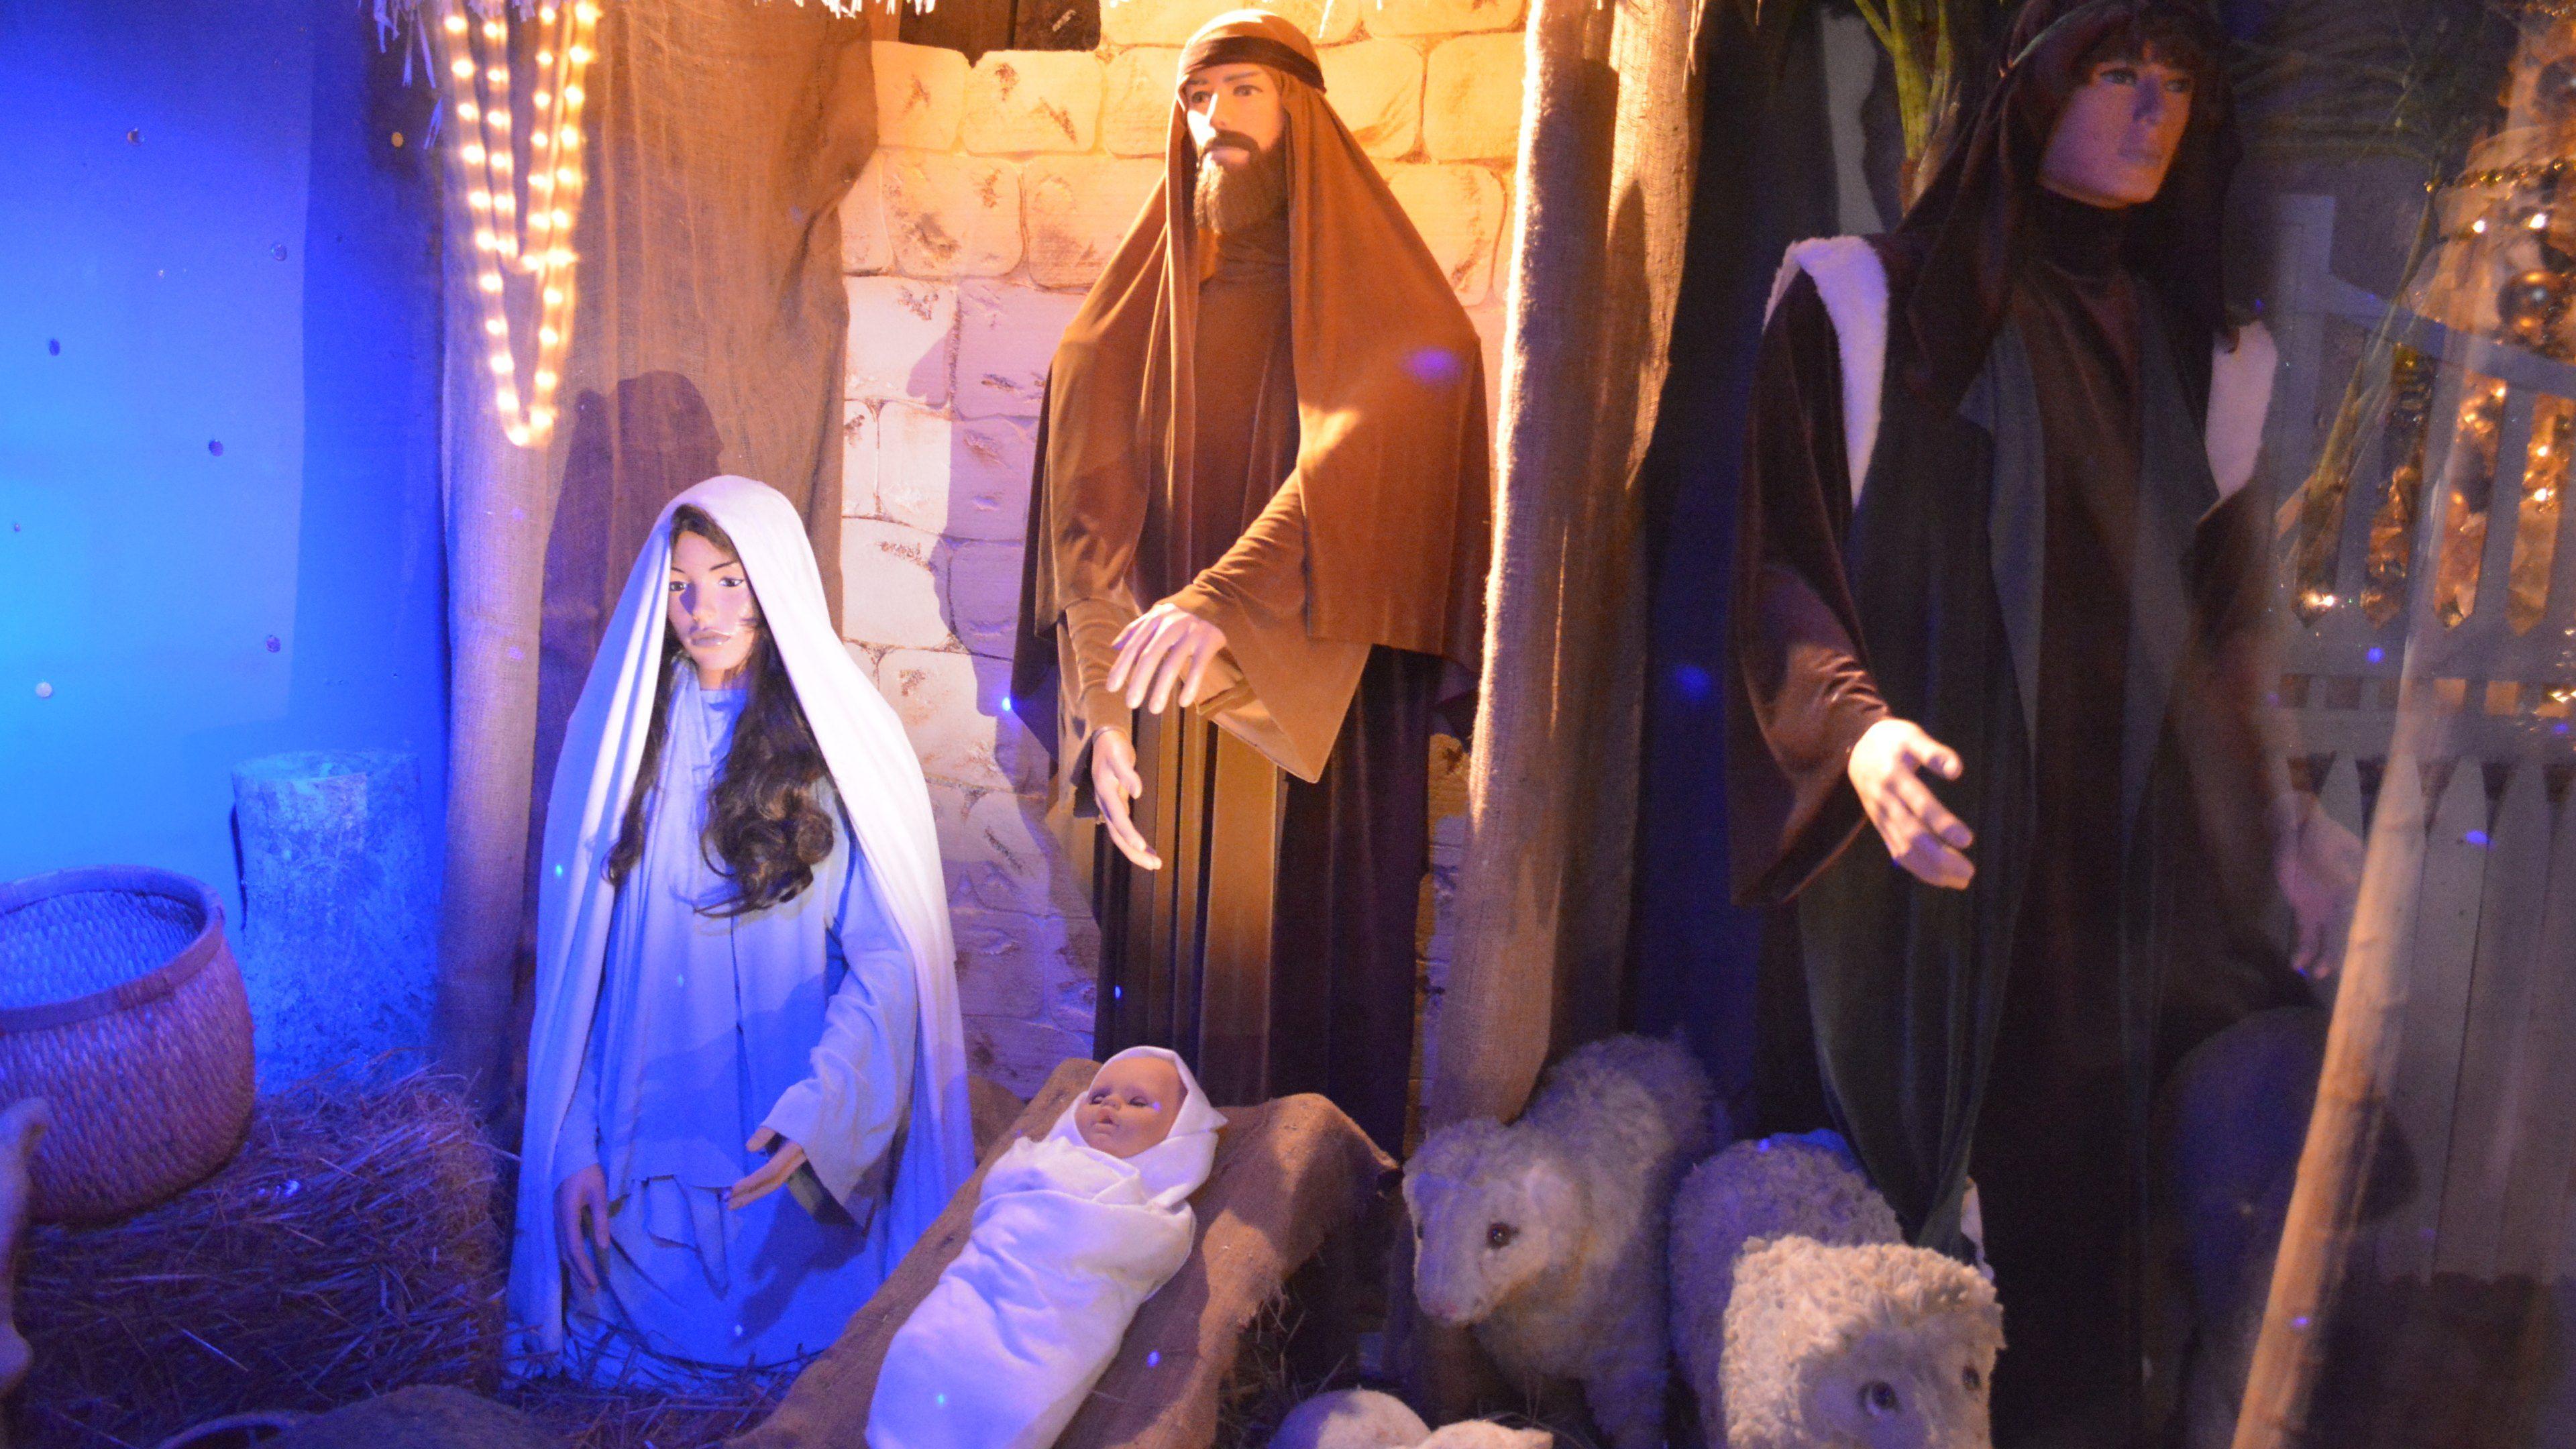 Birth of Jesus scene at every Christmas HD Wallpaper. 4K